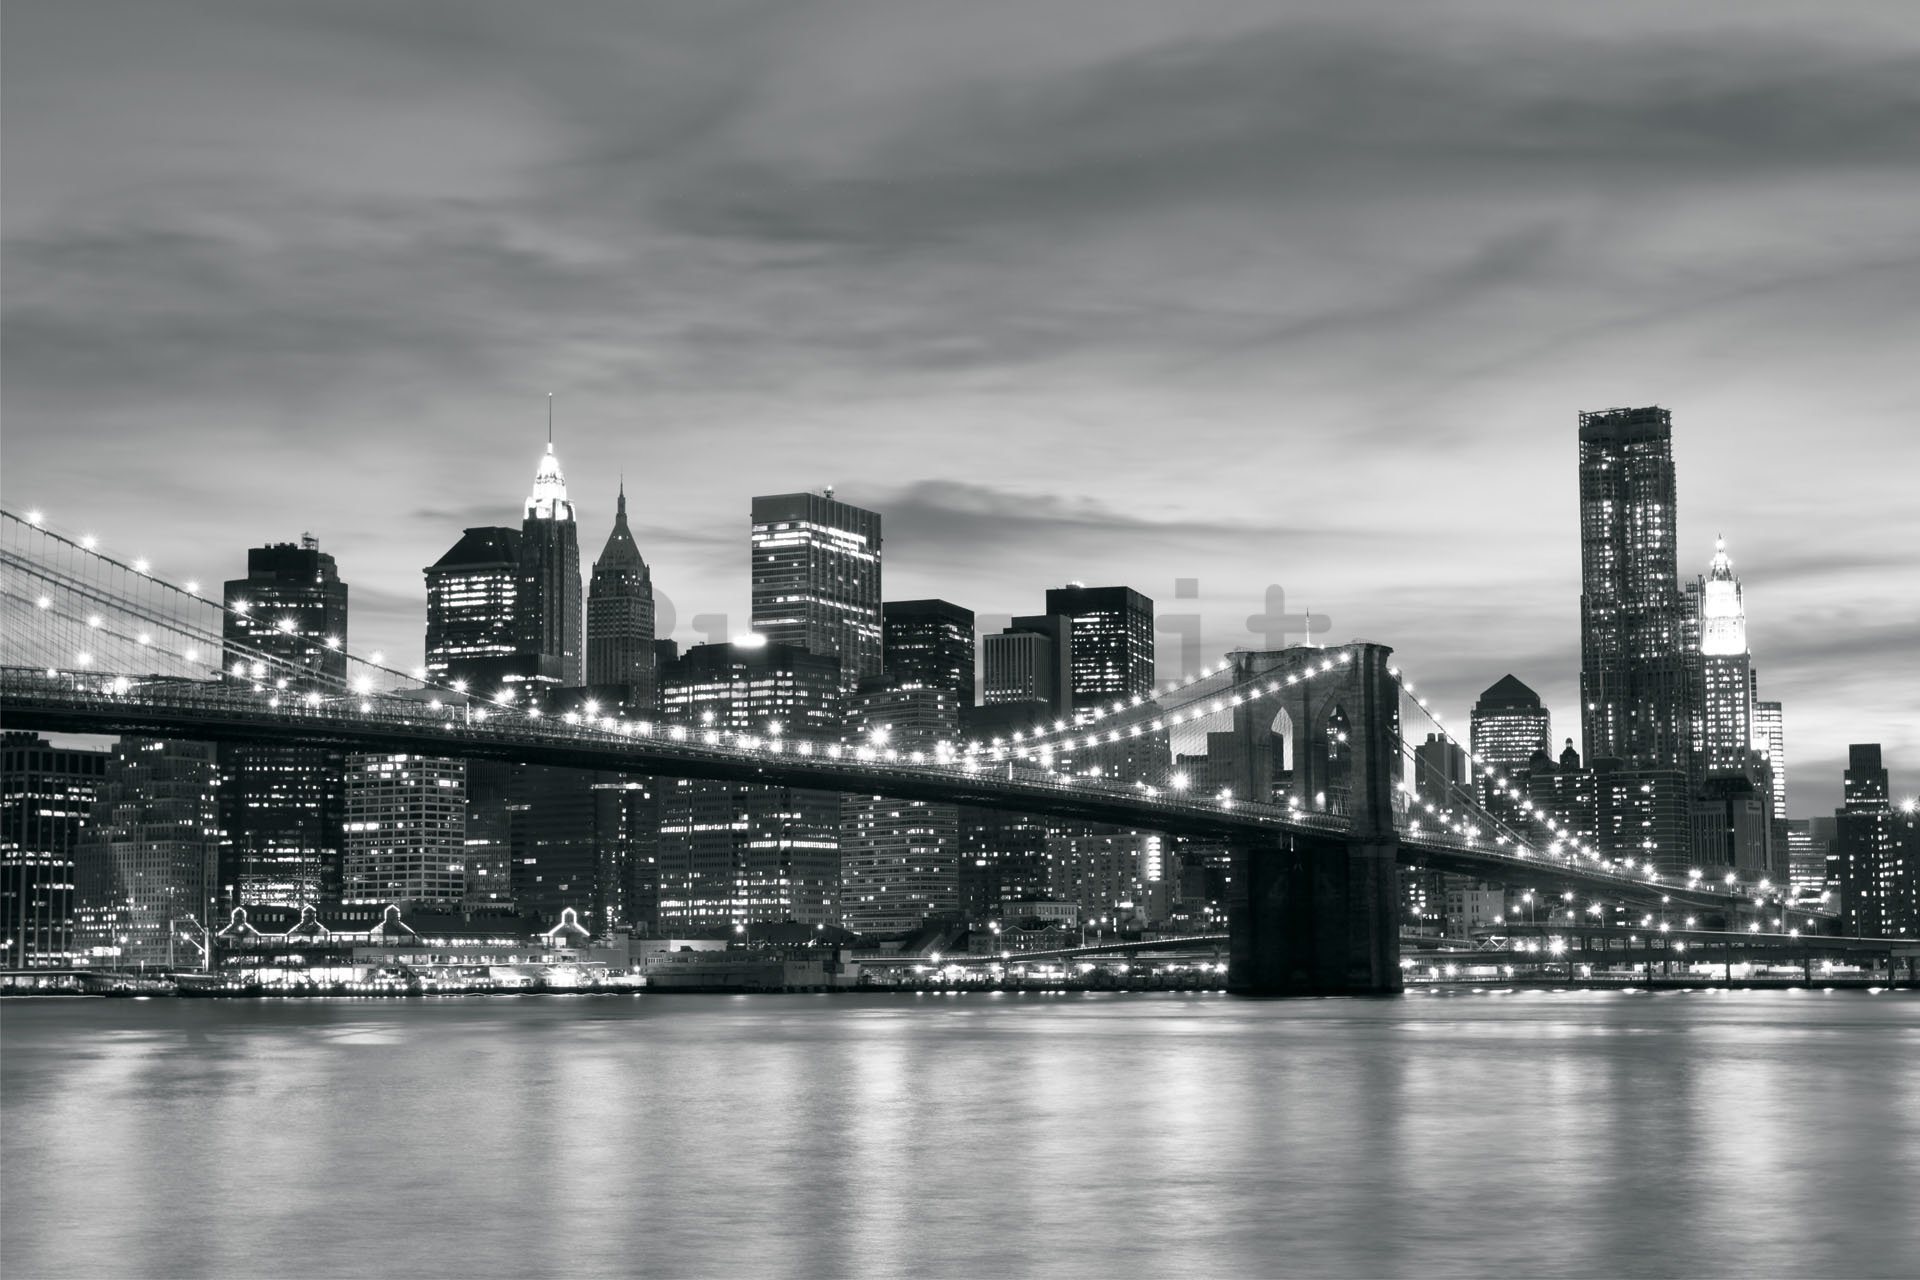 Fotomurale: Brooklyn Bridge - 184x254 cm